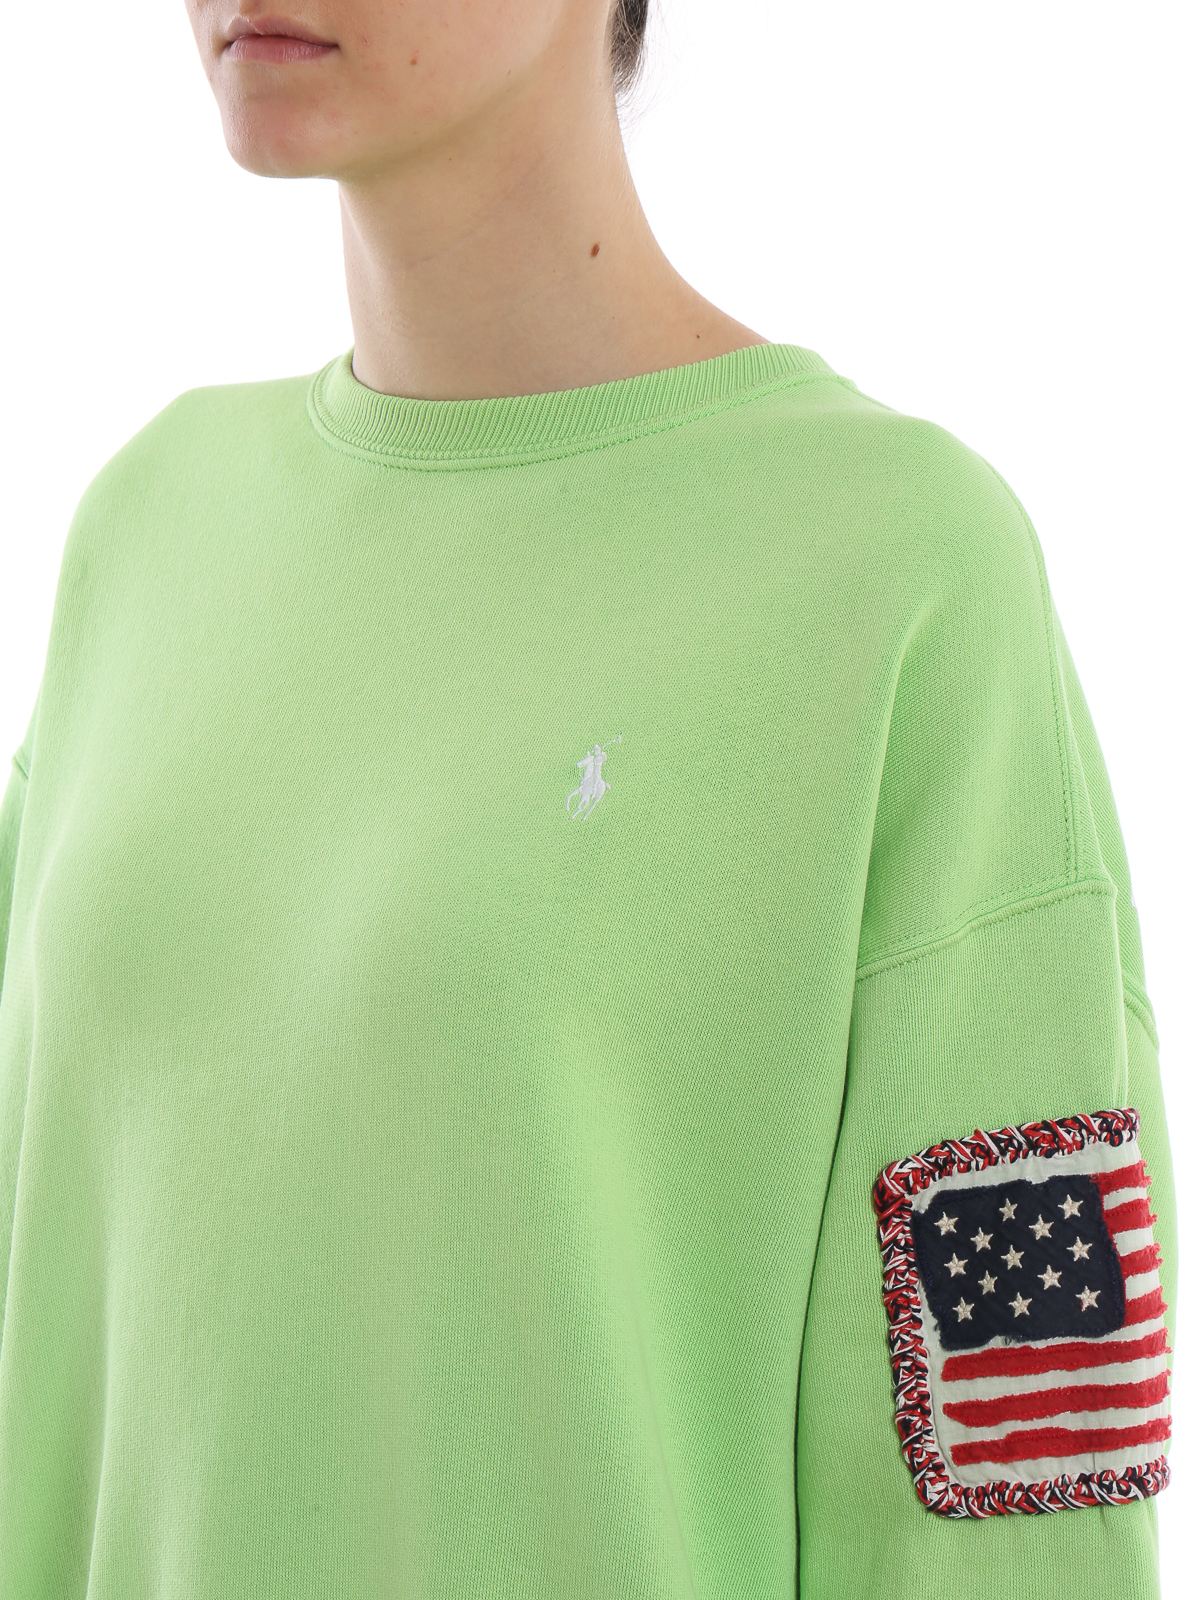 Sweatshirts & Sweaters Polo Ralph Lauren - American flag cotton sweatshirt  - 211744524001